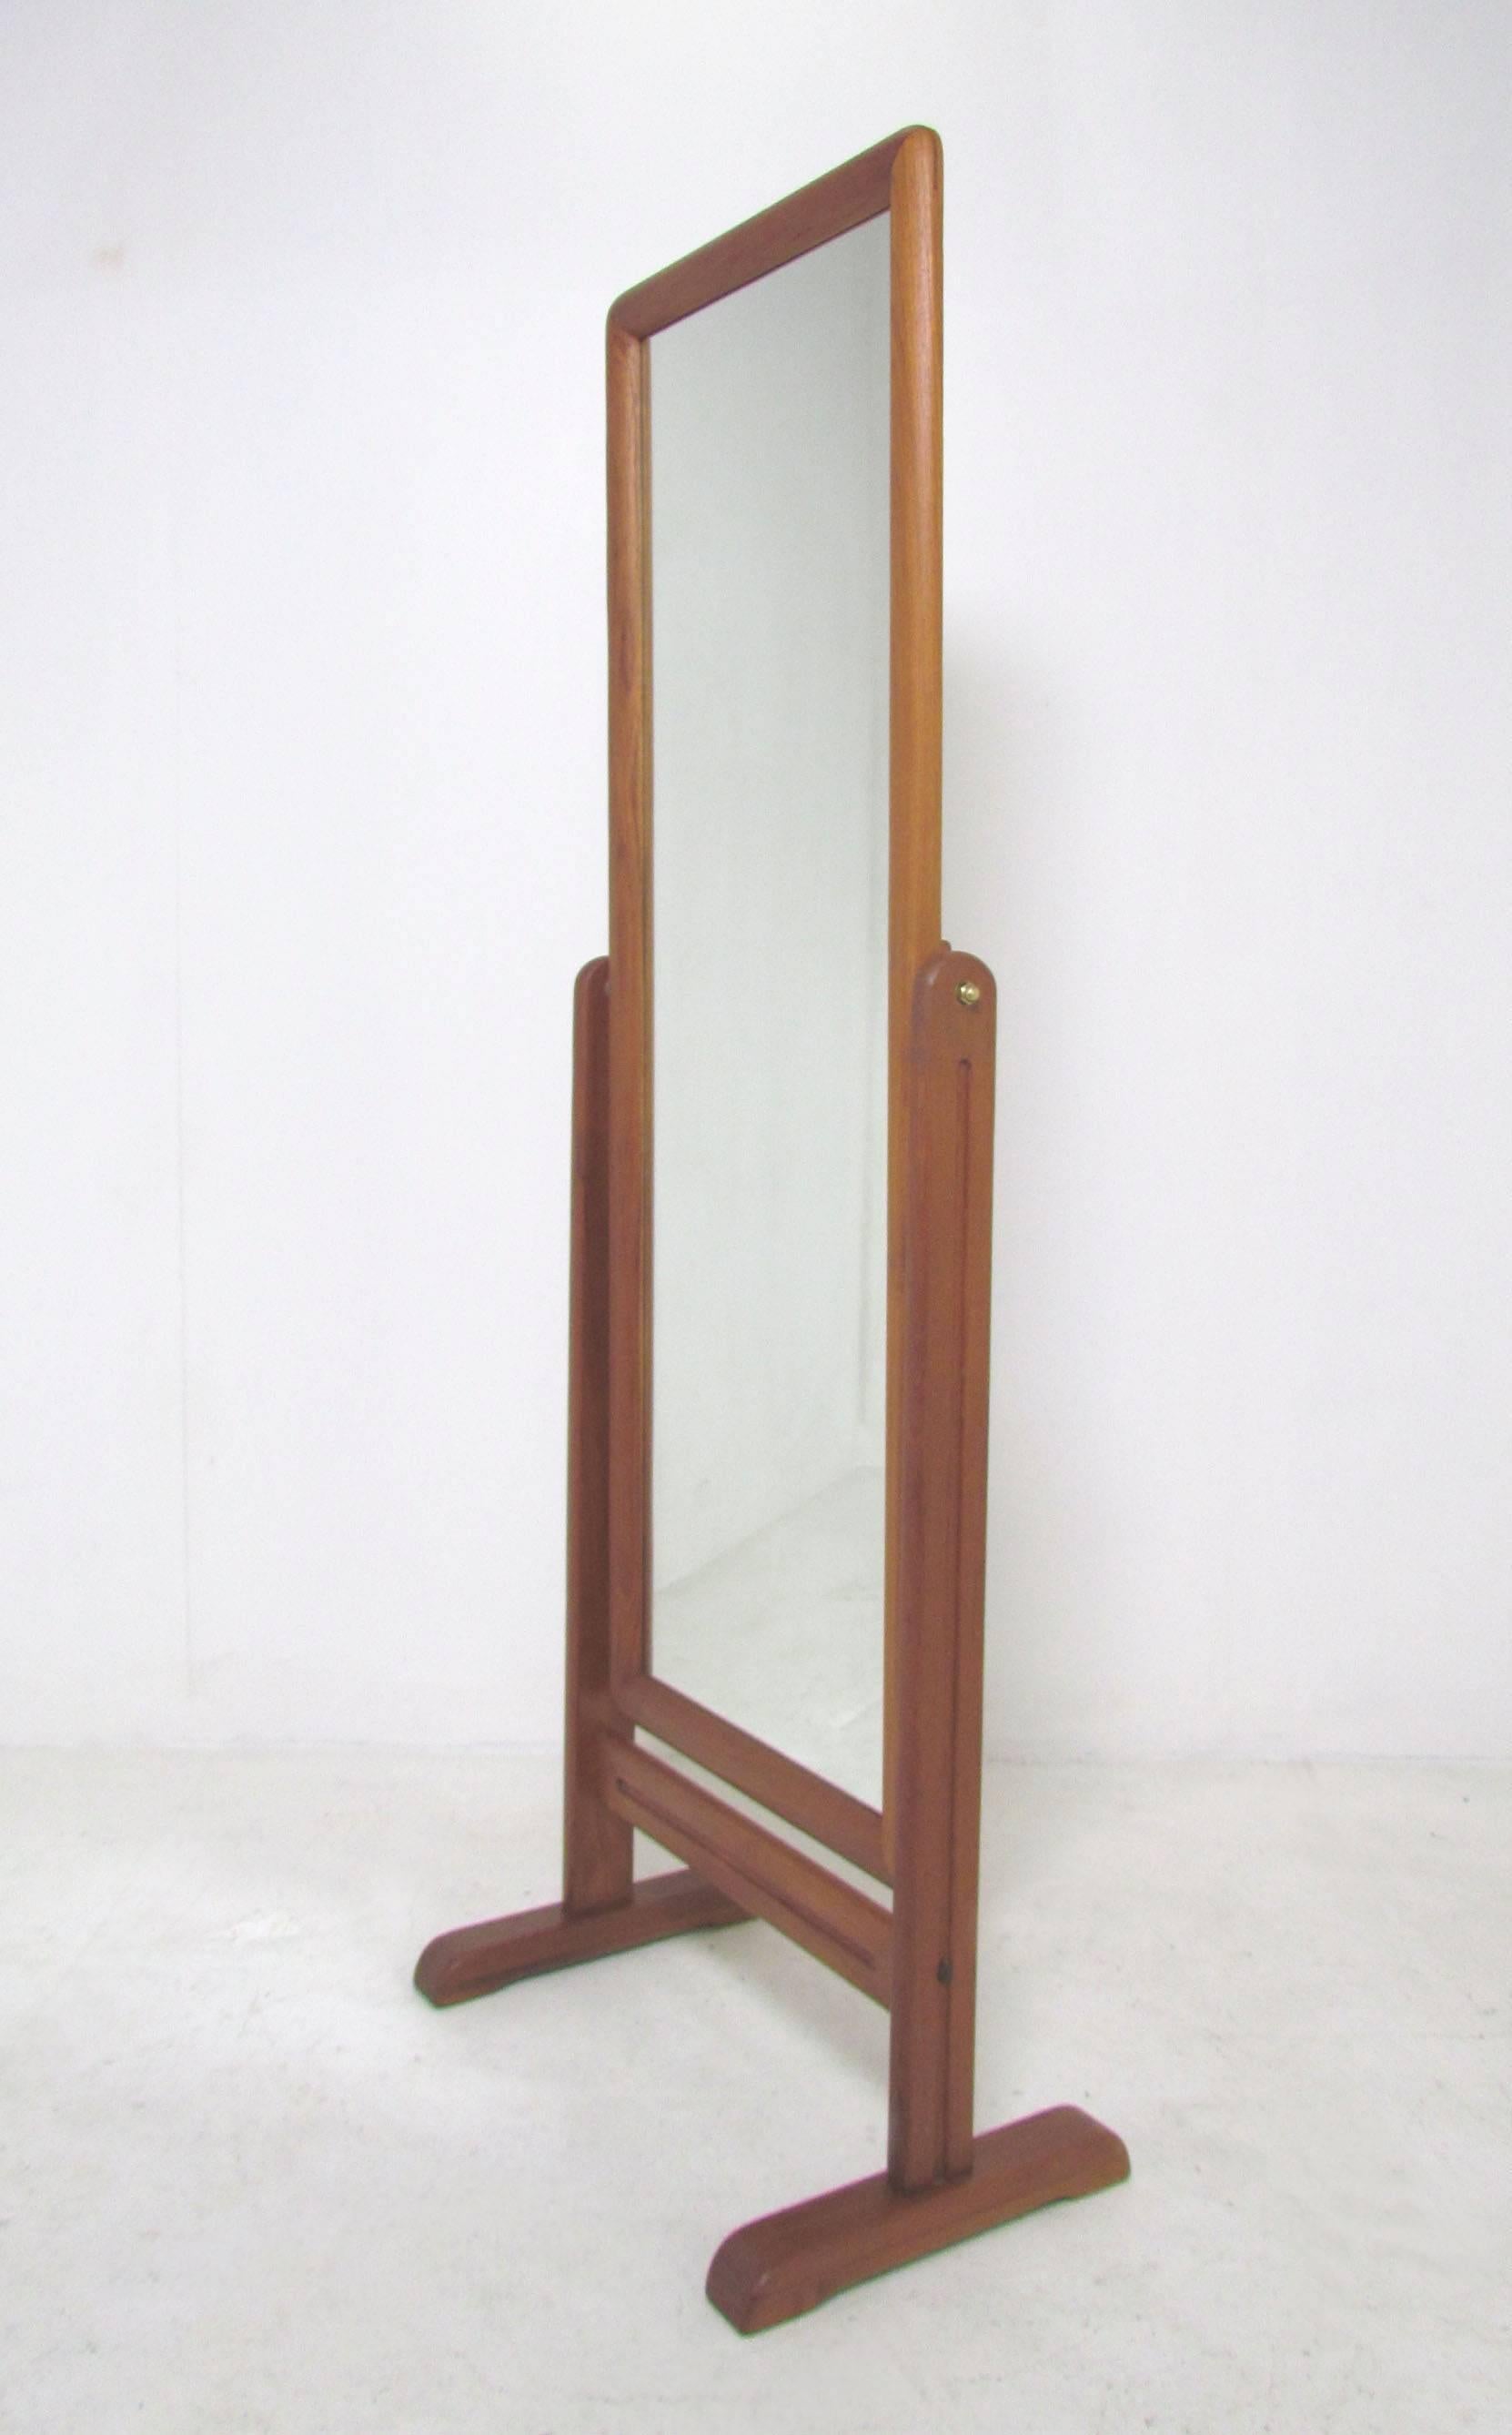 Danish teak full length cheval mirror, adjustable angle, attributed to Pedersen & Hansen.